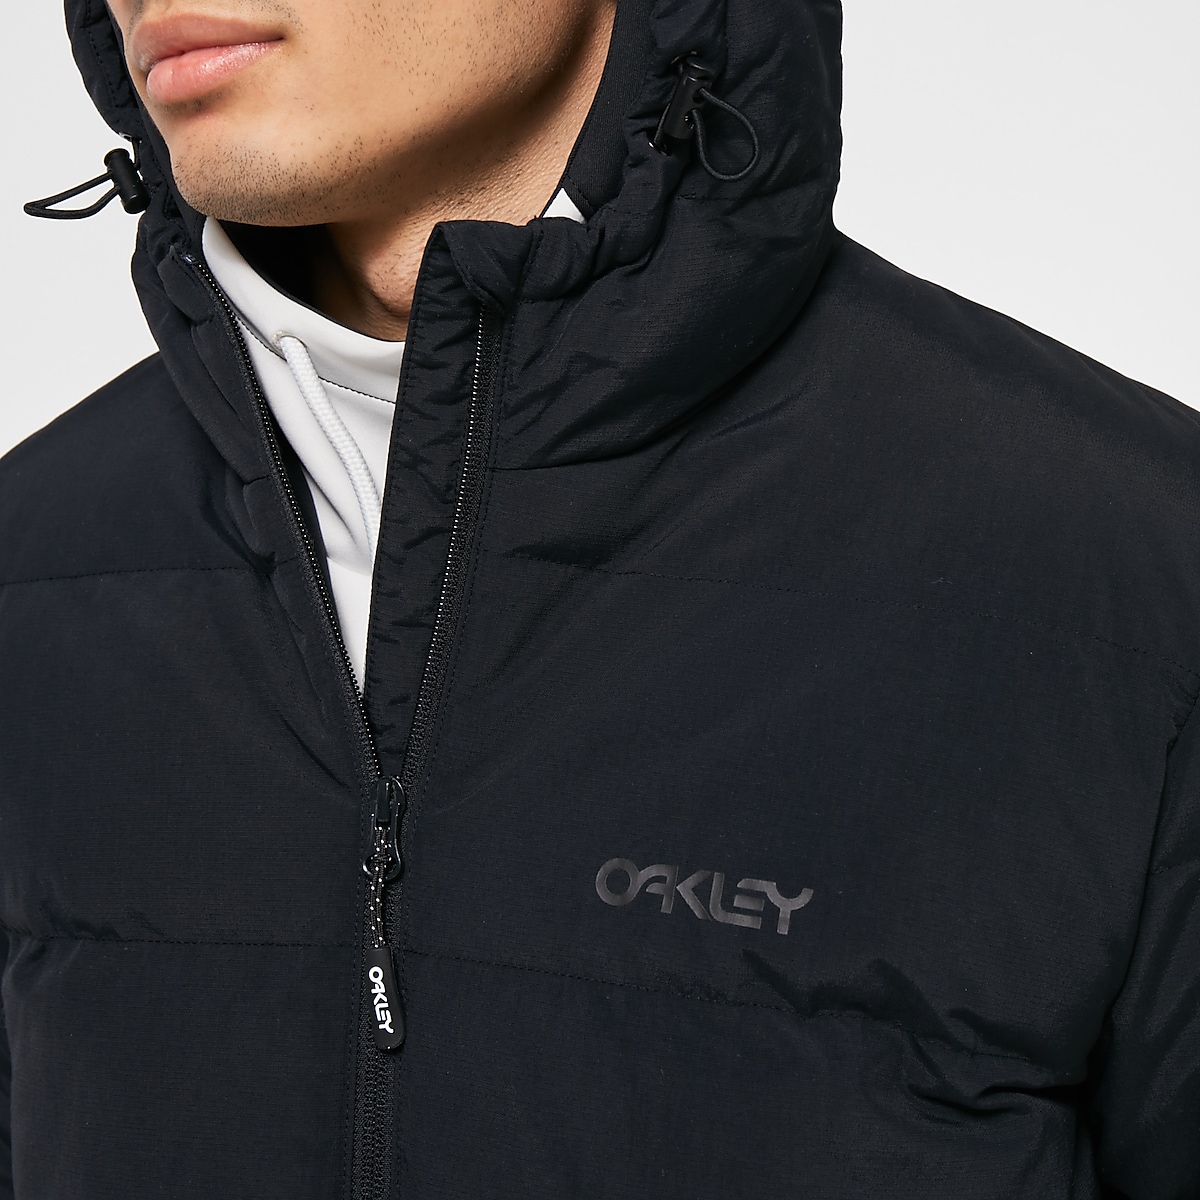 Oakley Quilted Jacket - Blackout | Oakley US Store